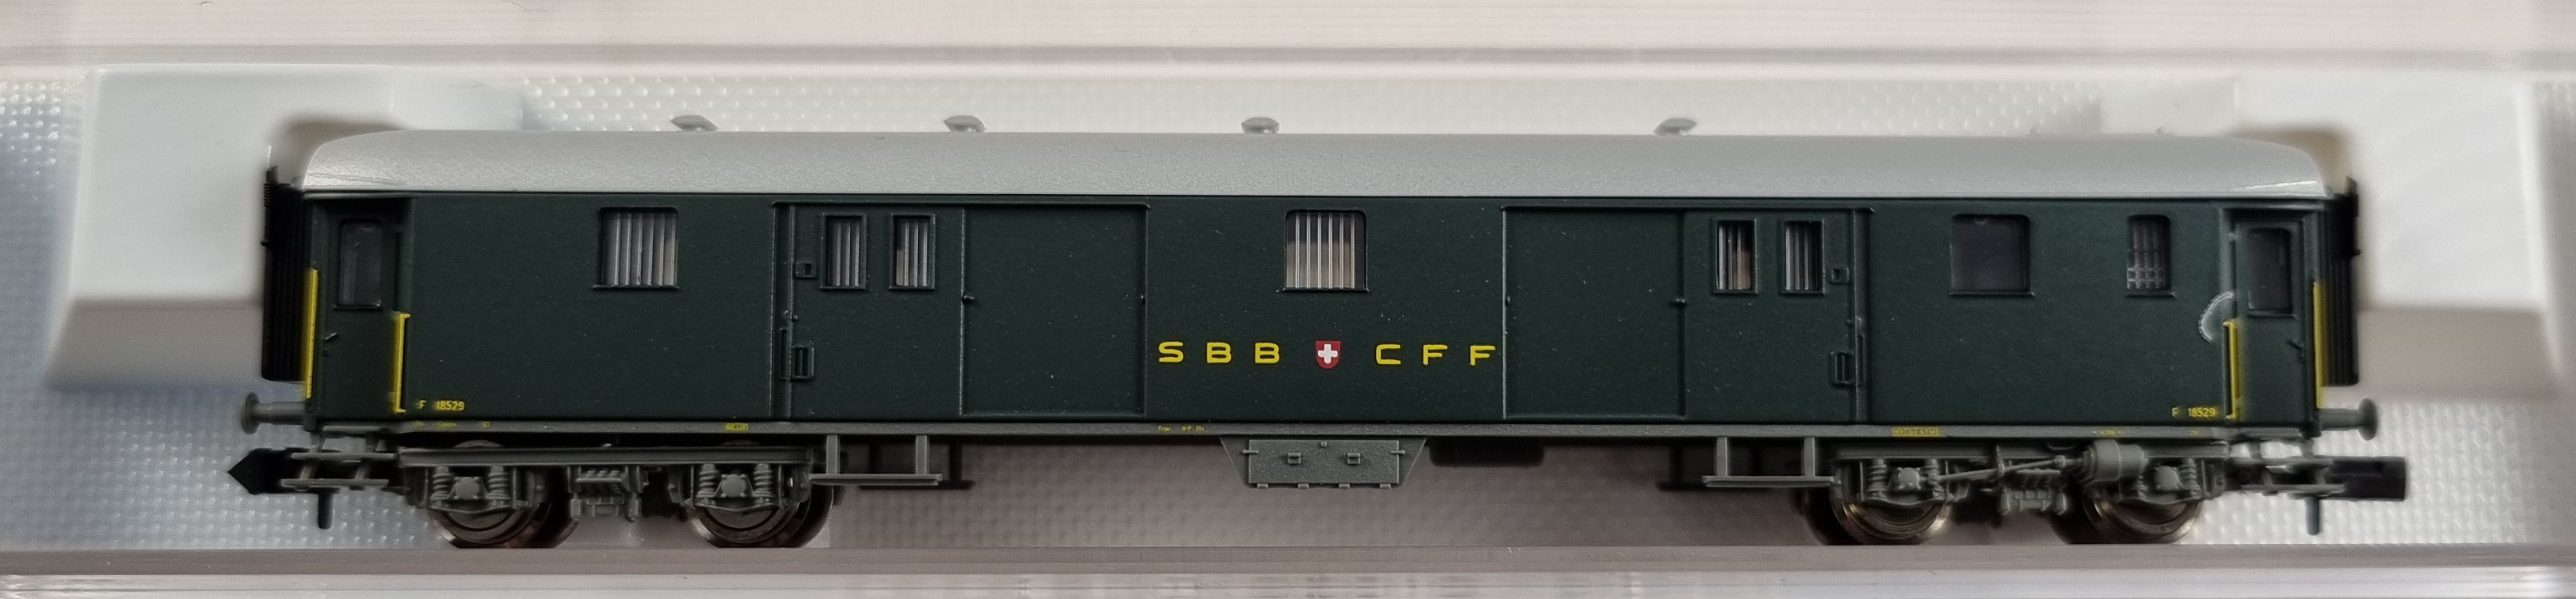 Fleischmann 813005, SBB resgodsvagn, Skala N, SH 767-11, N6